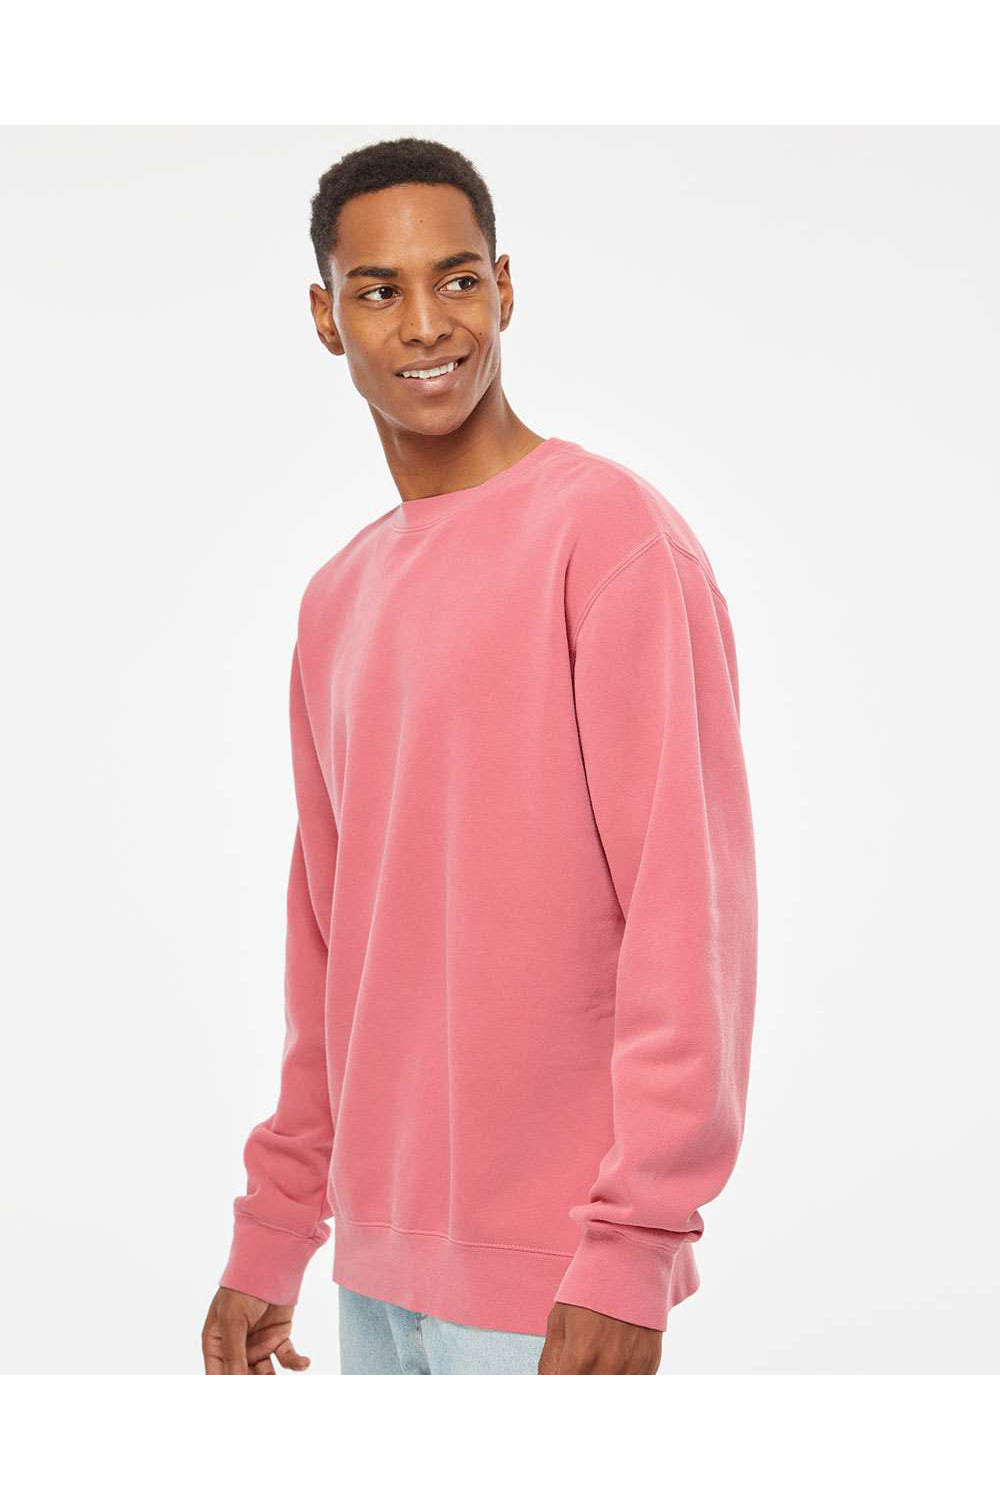 Independent Trading Co. PRM3500 Mens Pigment Dyed Crewneck Sweatshirt Pink Model Side